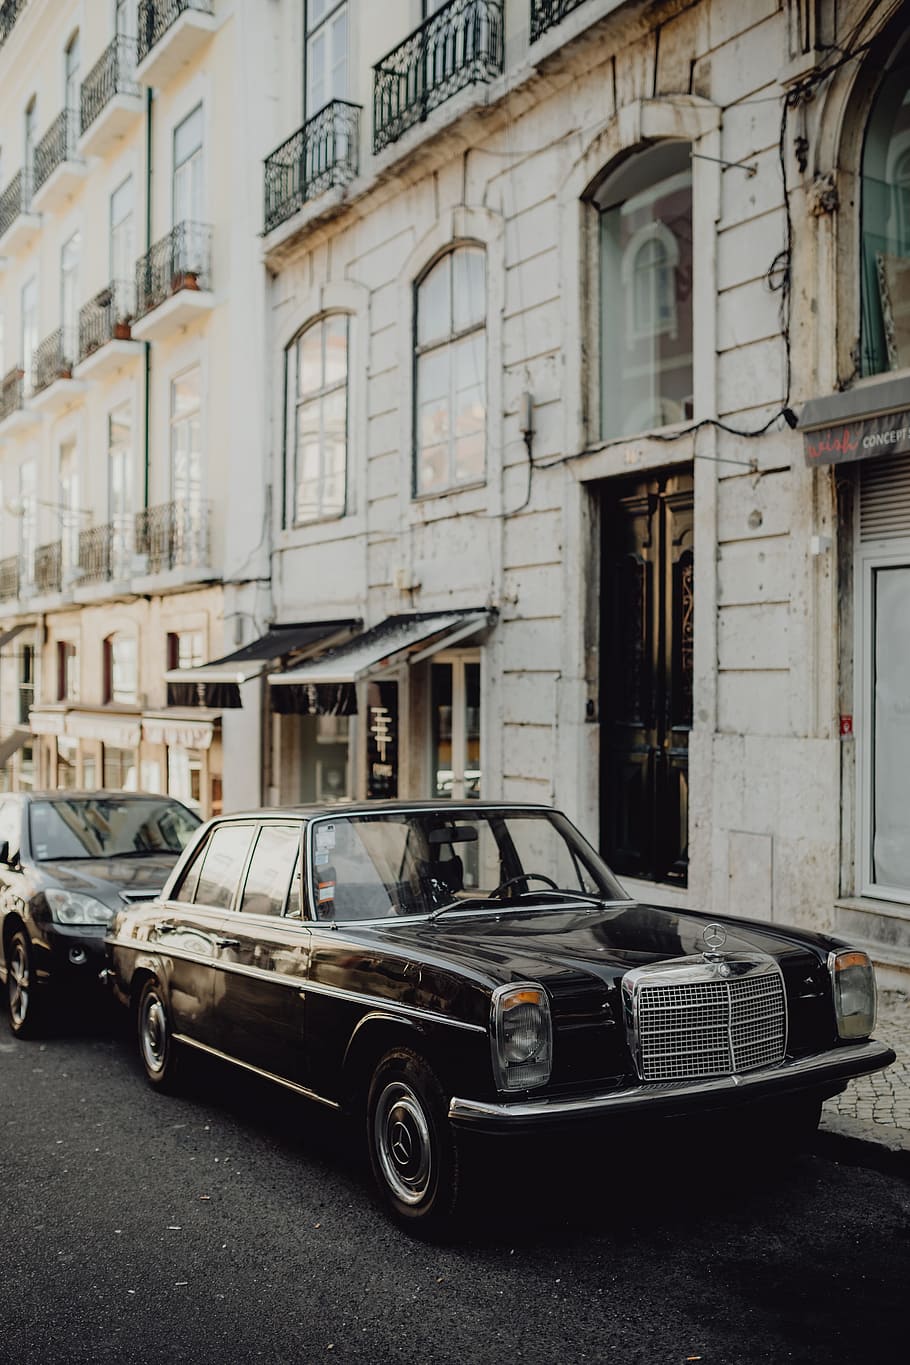 HD wallpaper: An old Mercedes Benz parked in the street, Lisbon